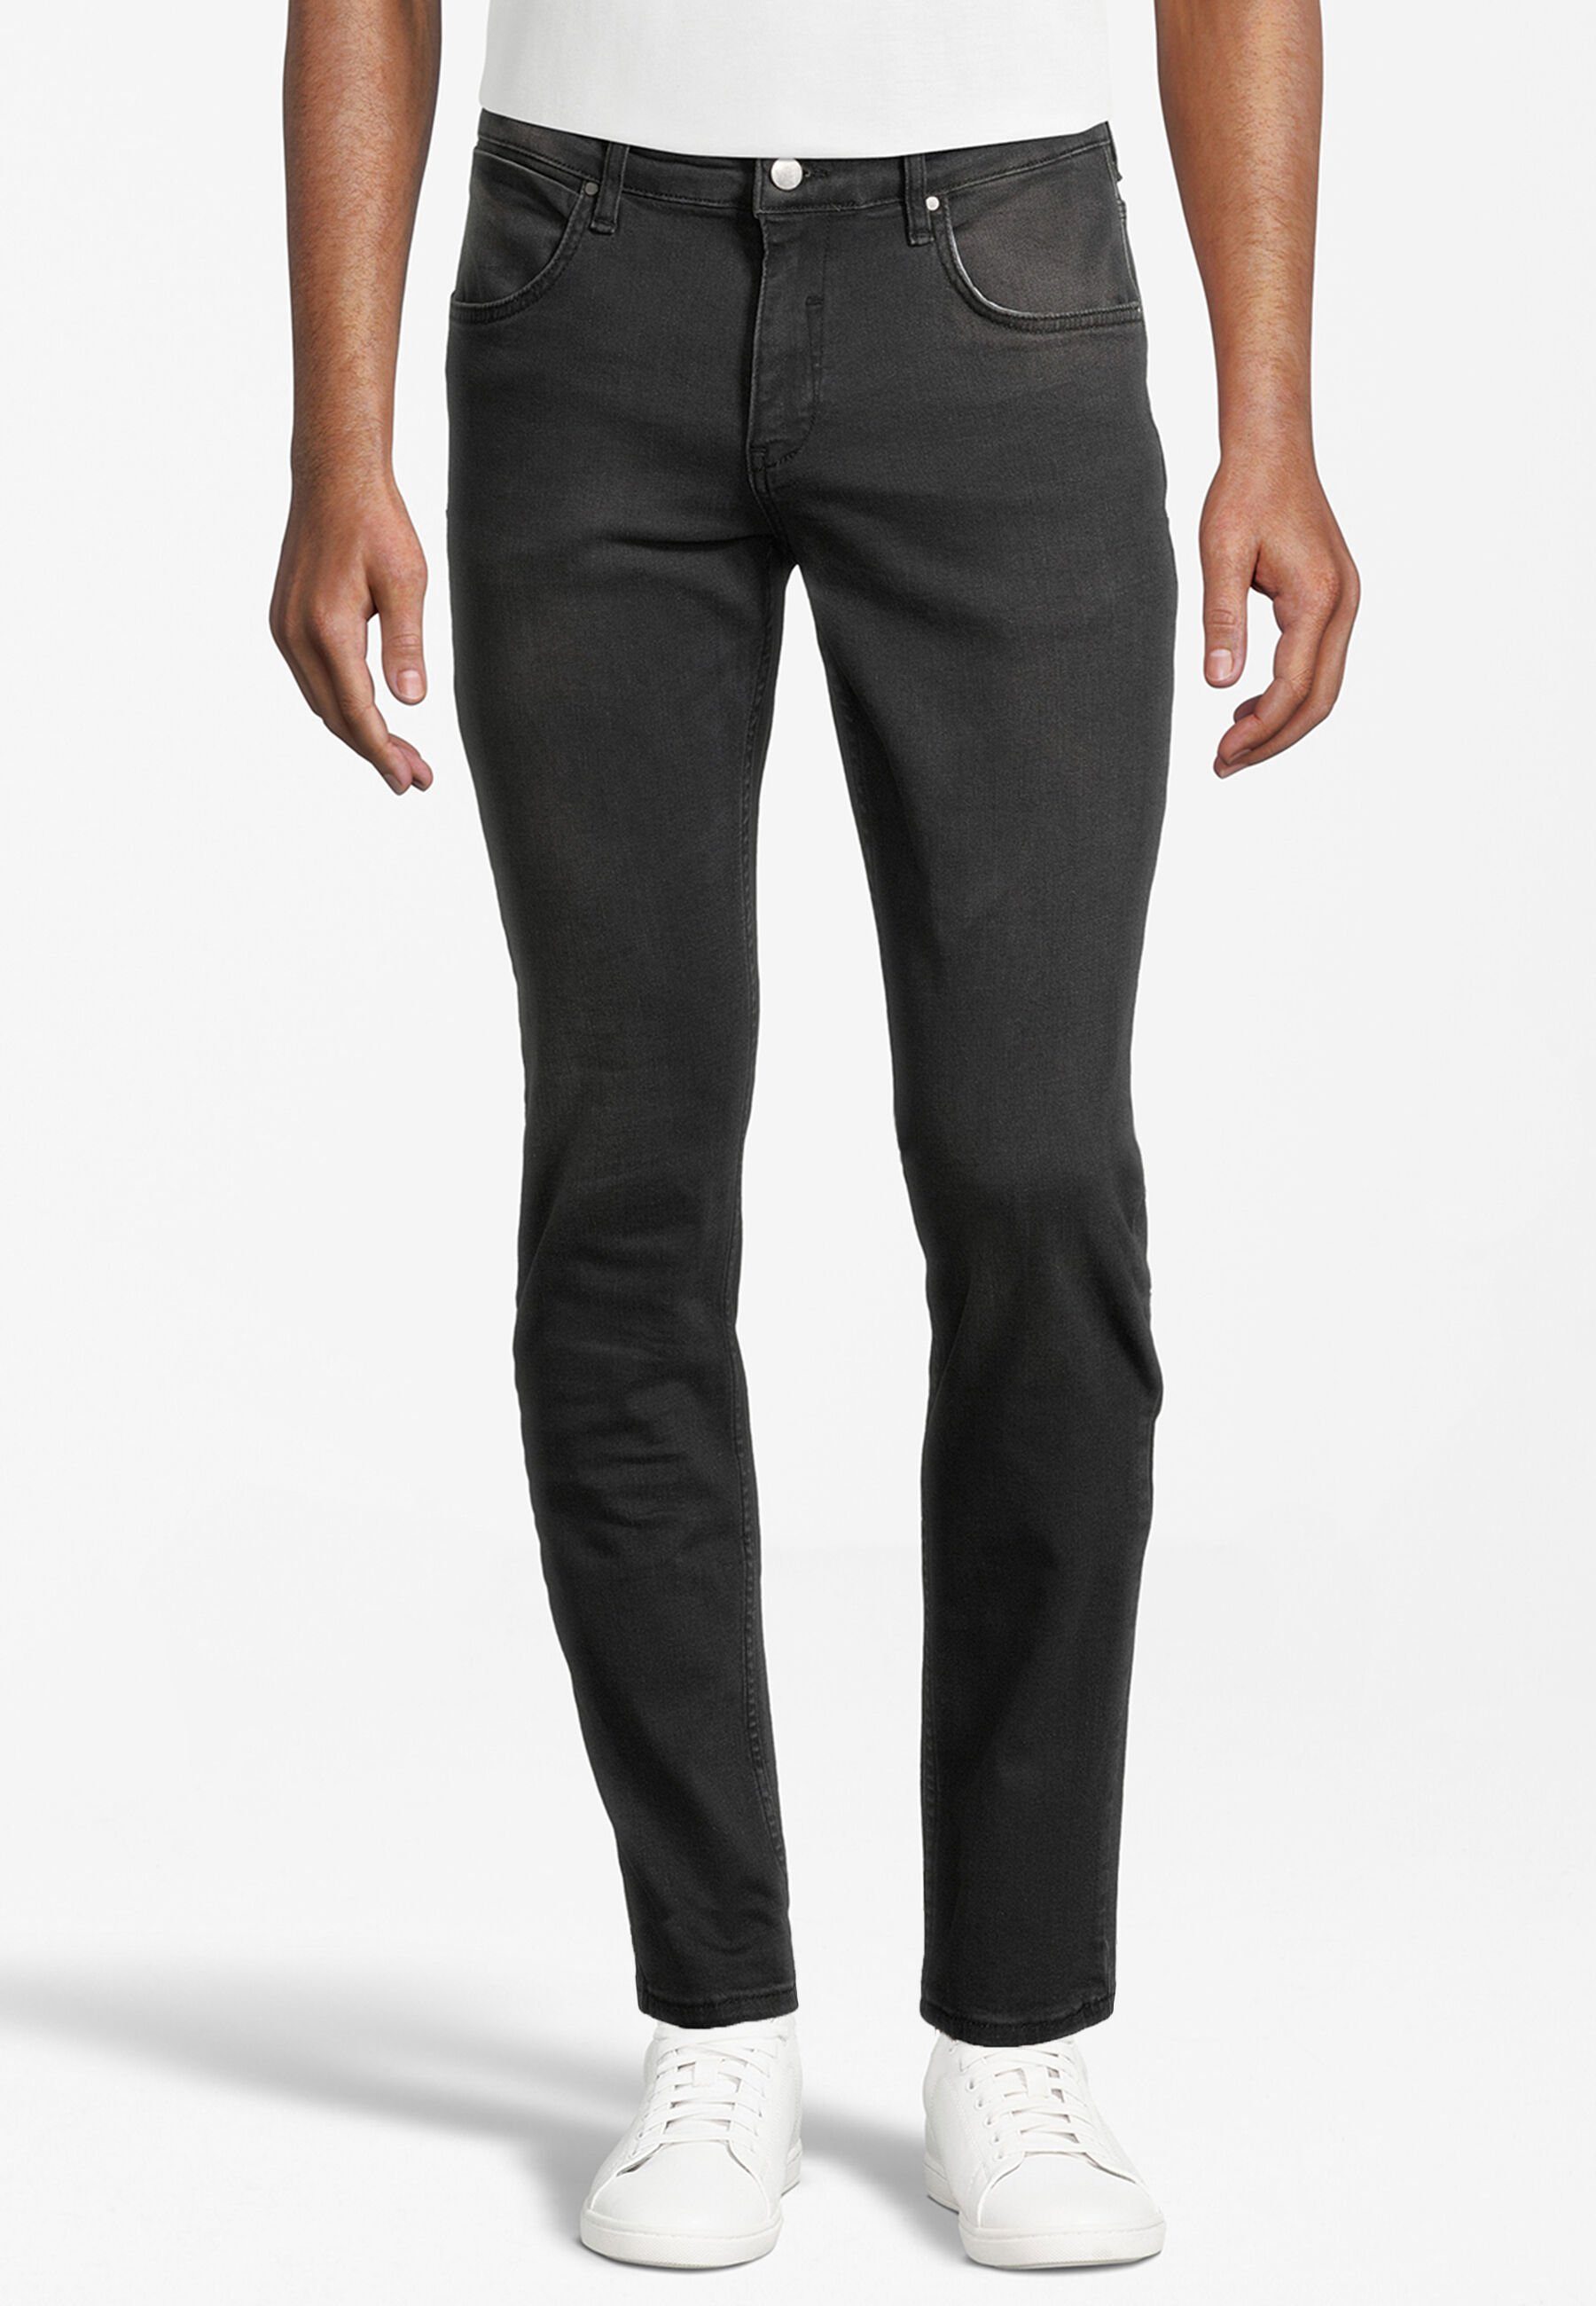 SteffenKlein Slim-fit-Jeans black denim | Slim-Fit Jeans